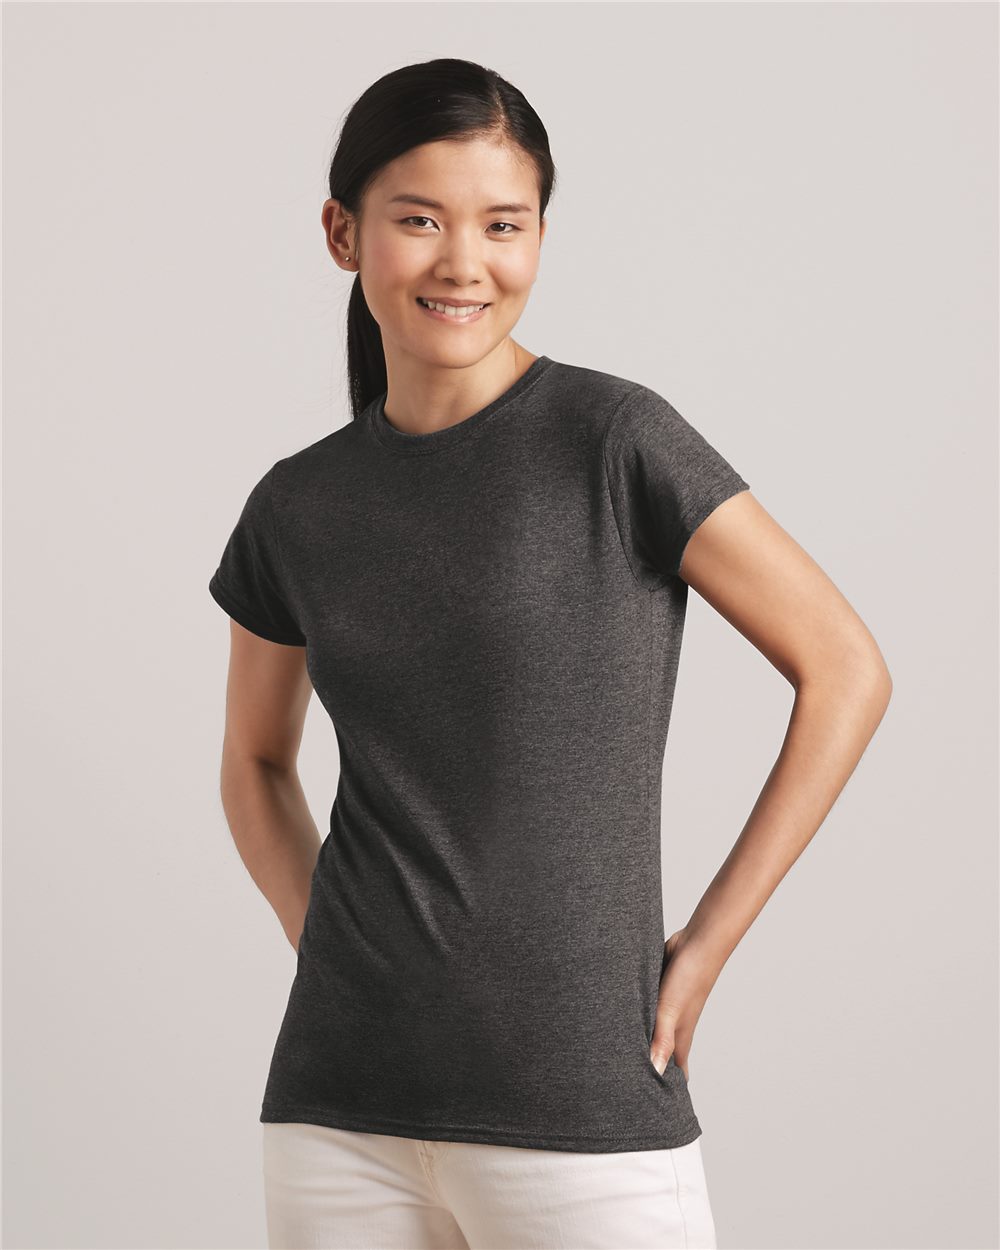 Gildan Womens Softstyle Short Sleeve Crew Neck Cotton T-Shirt Ladies Fit Top New 